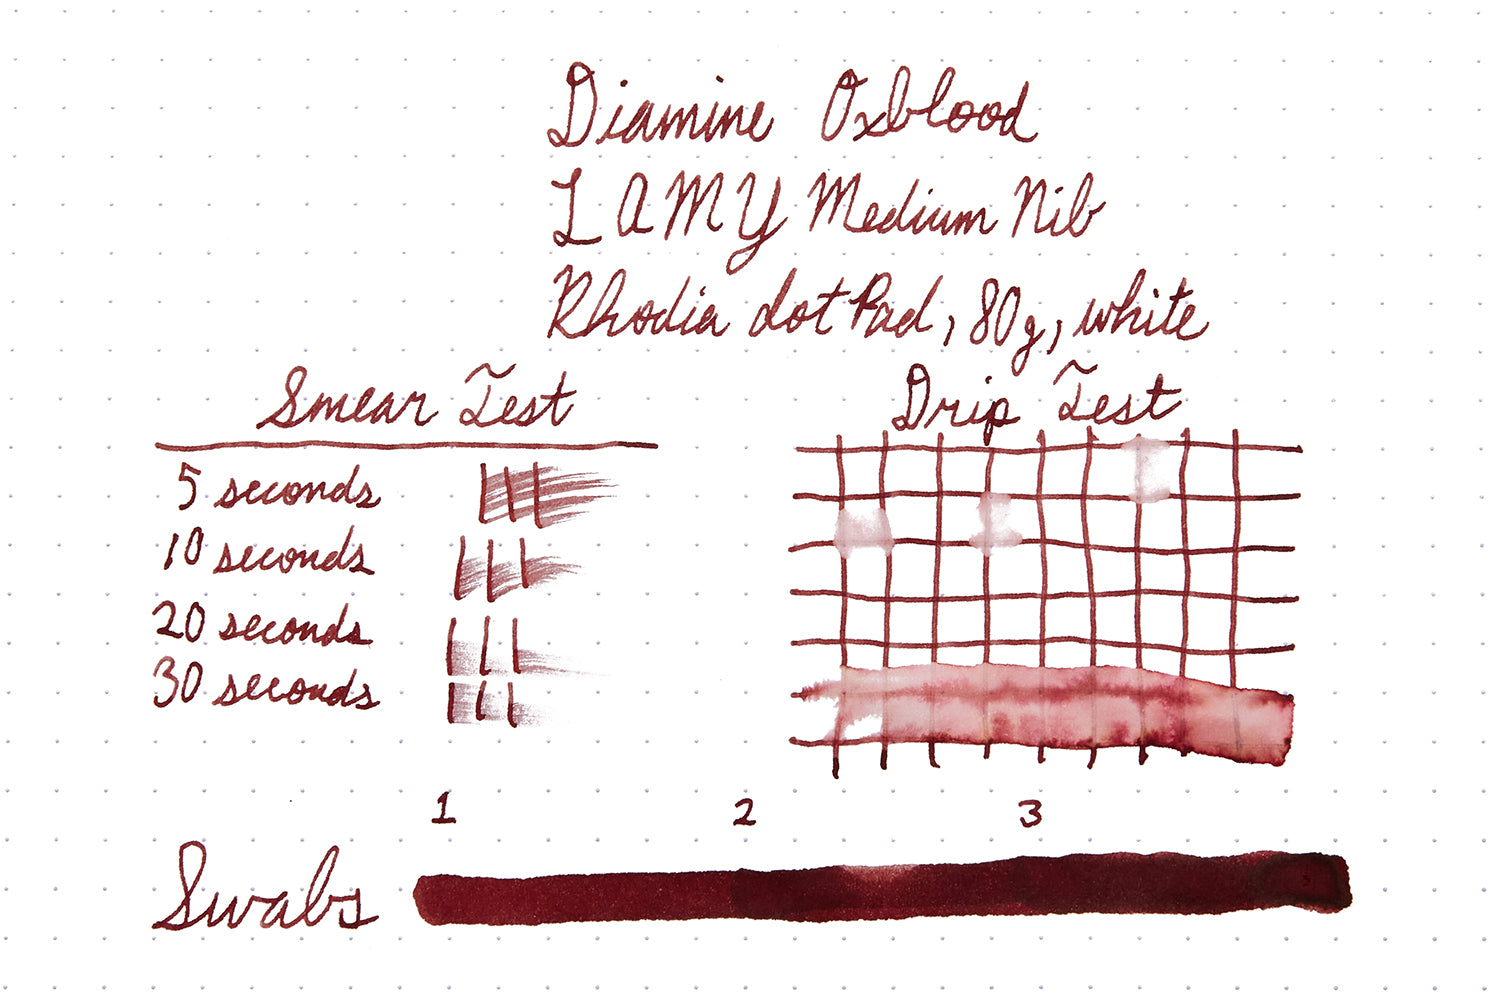 Diamine Oxblood Fountain Pen ink writing sample on white dot grid paper